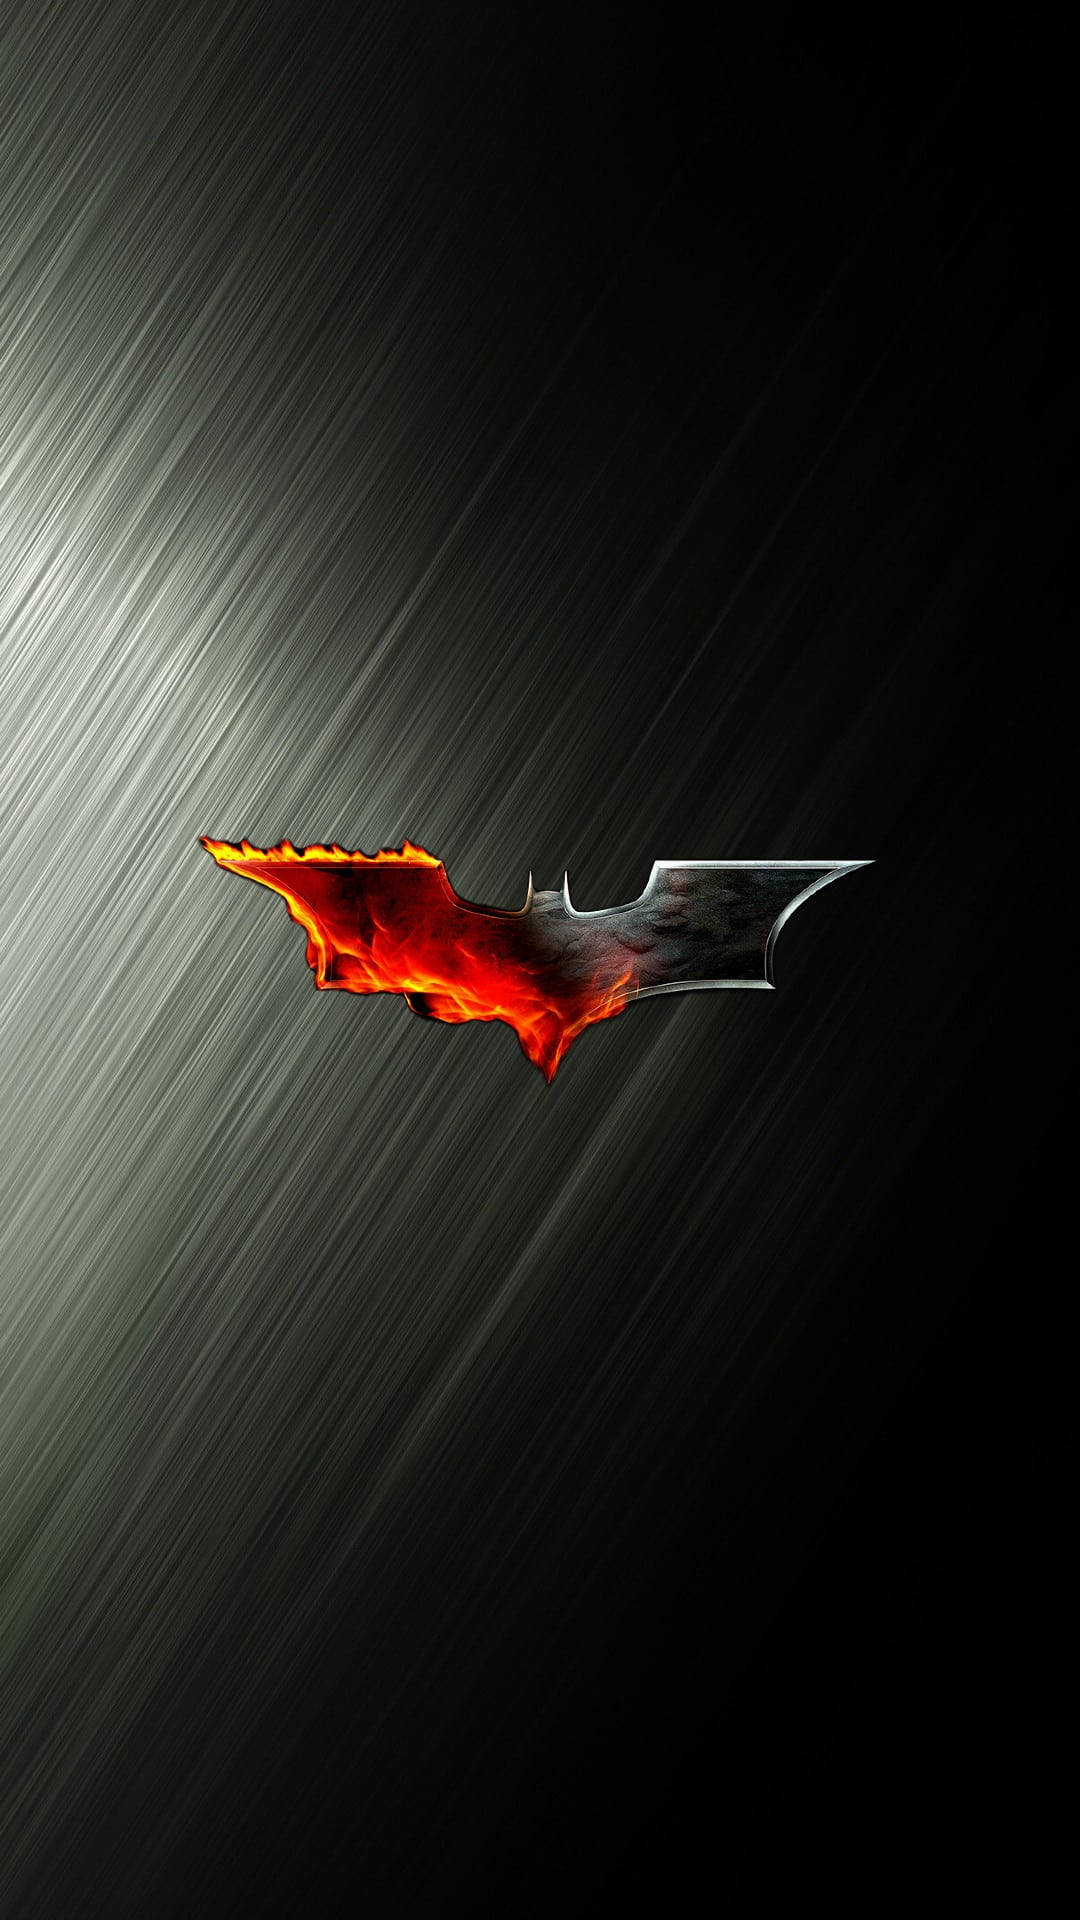 Burning Batman Logo iPhone Wallpaper